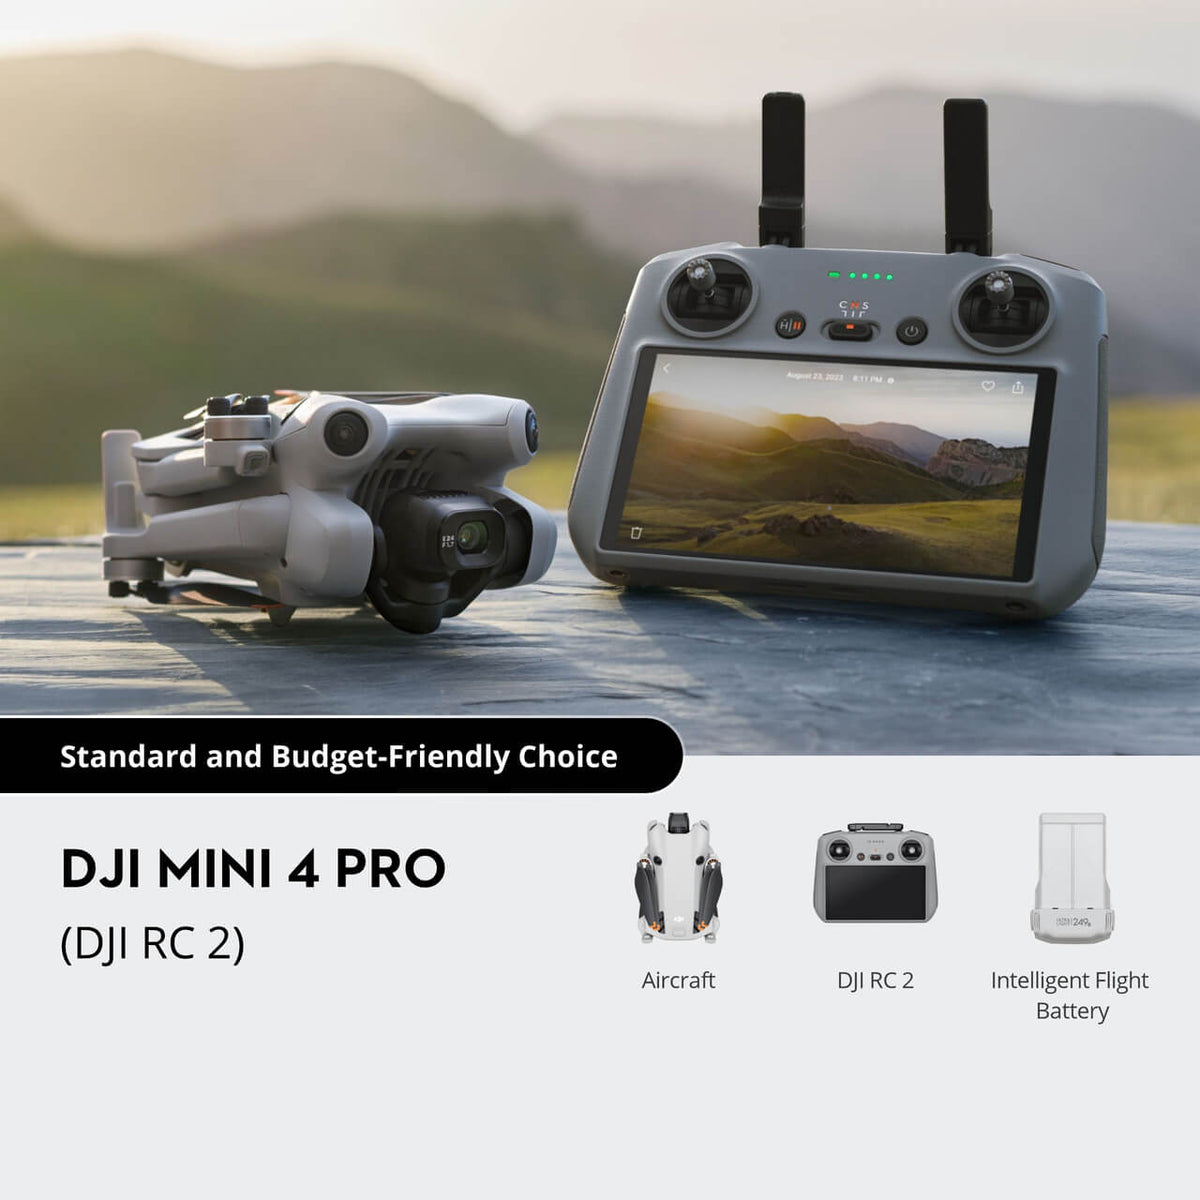 DJI DJI Mini 4 Pro (DJI RC 2) buy online at Modellsport Schweighofer